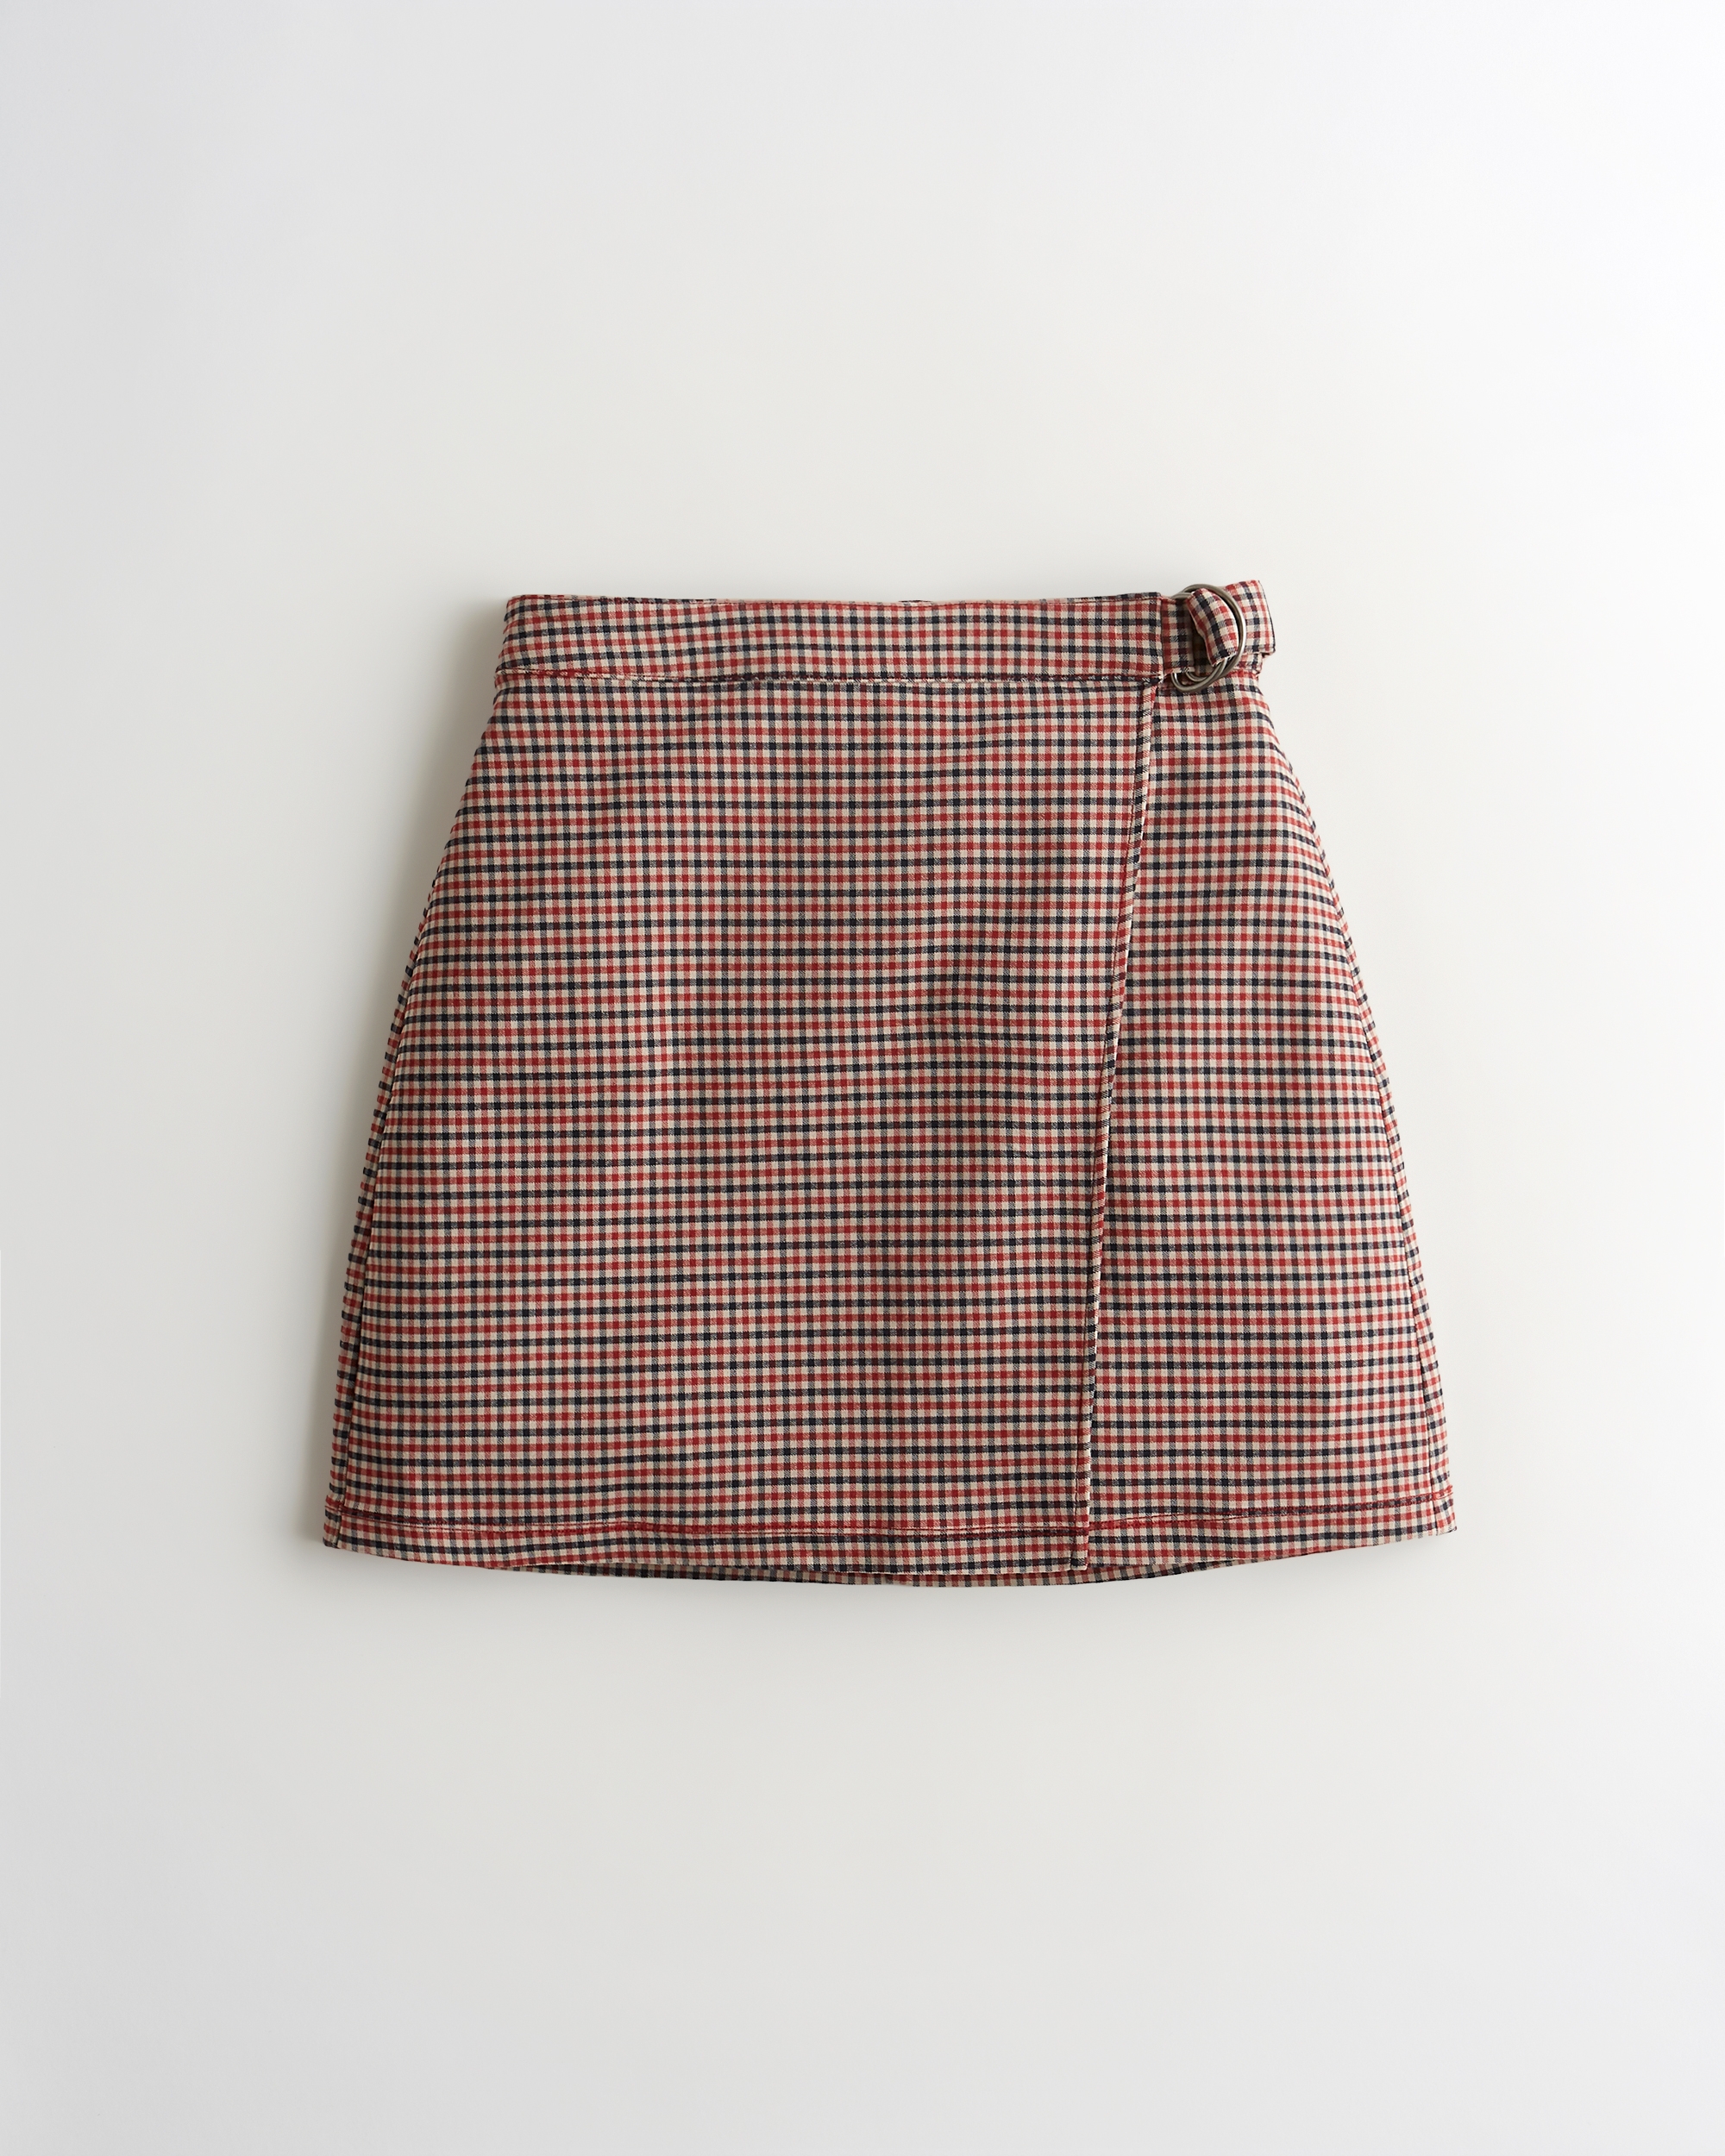 Girls Skirts: Denim, Plaid & Mini Skirts for Teens | Hollister Co.